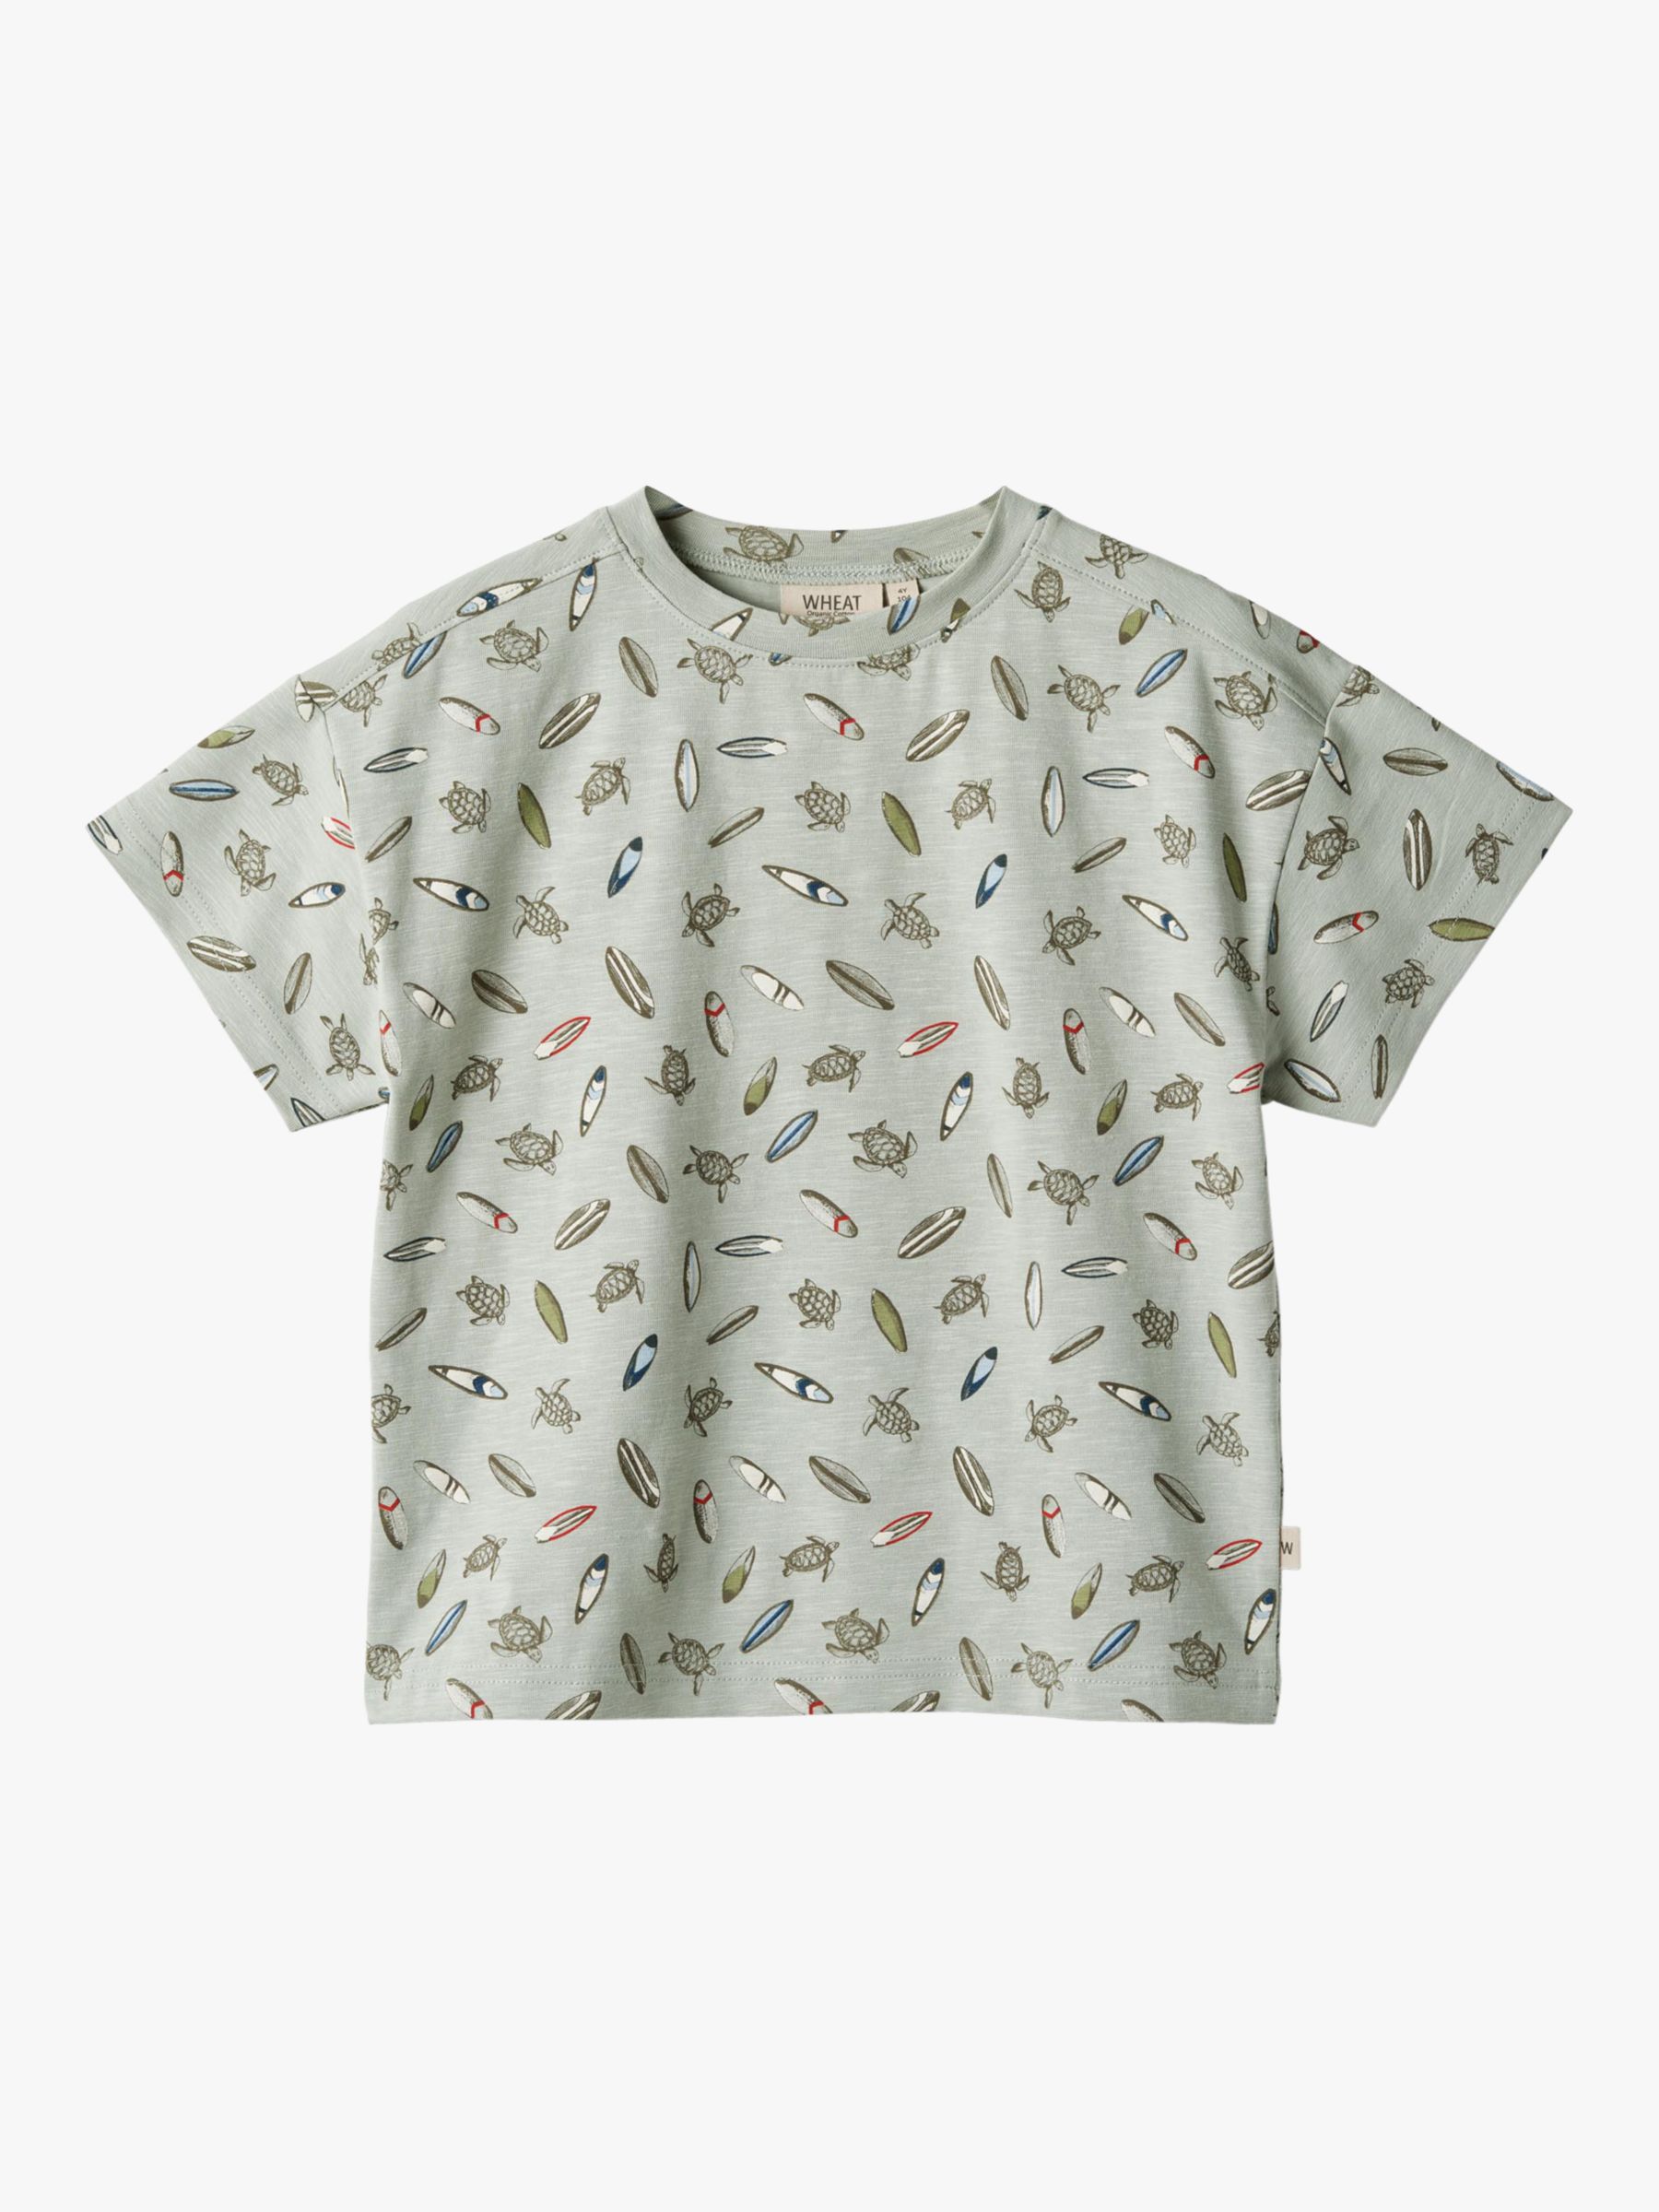 WHEAT Kids' Tommy Print T-Shirt, Multi, 4 years